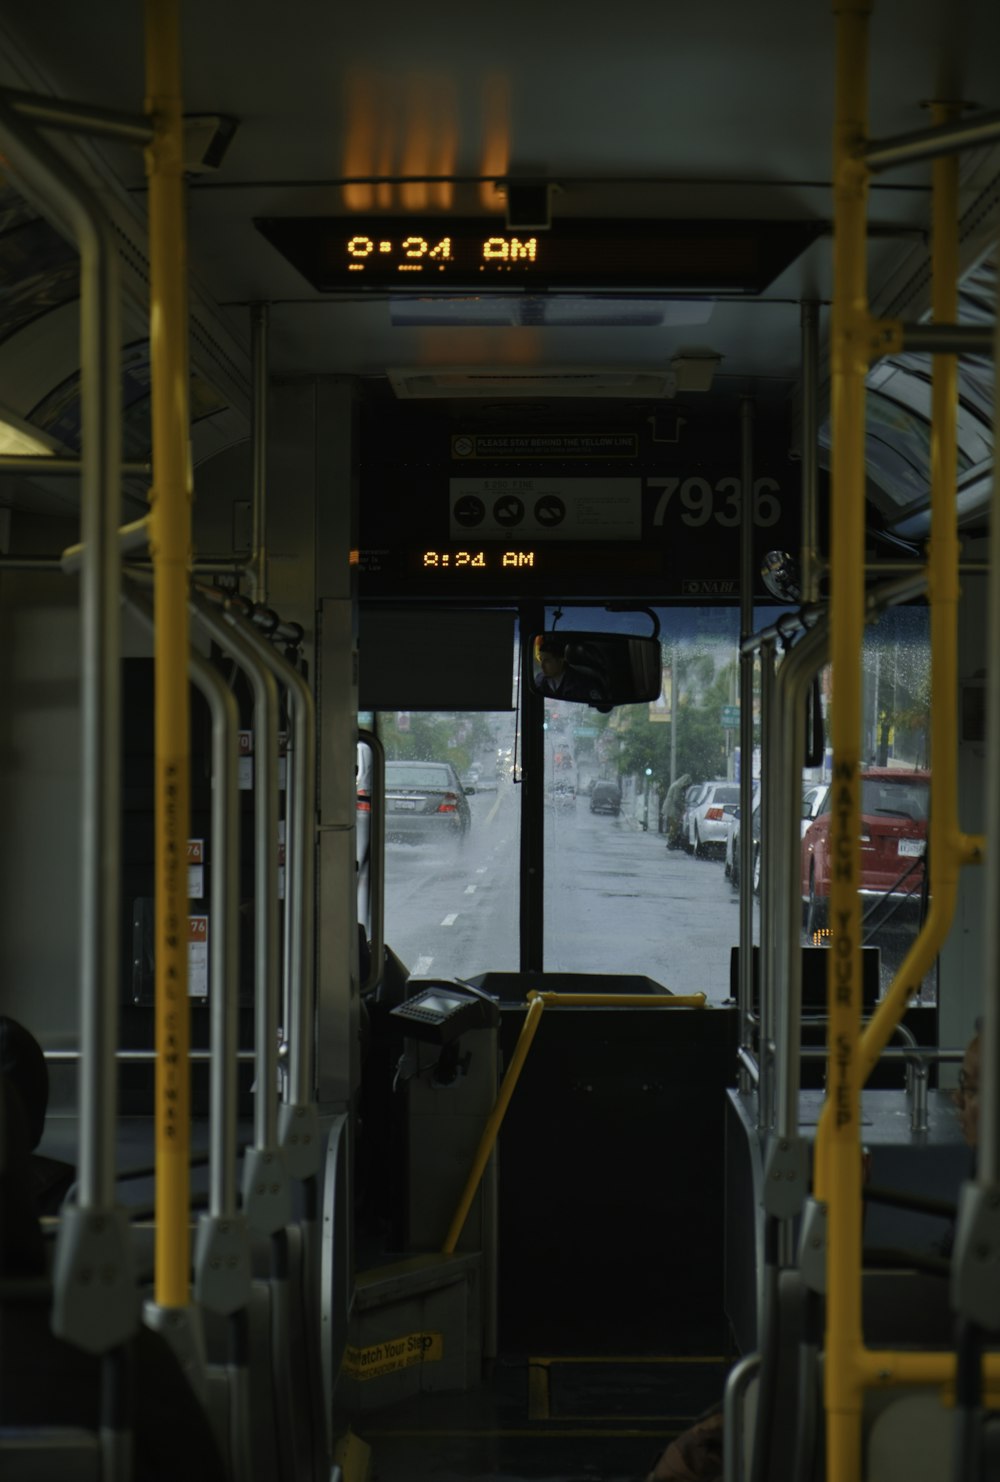 bus interior view